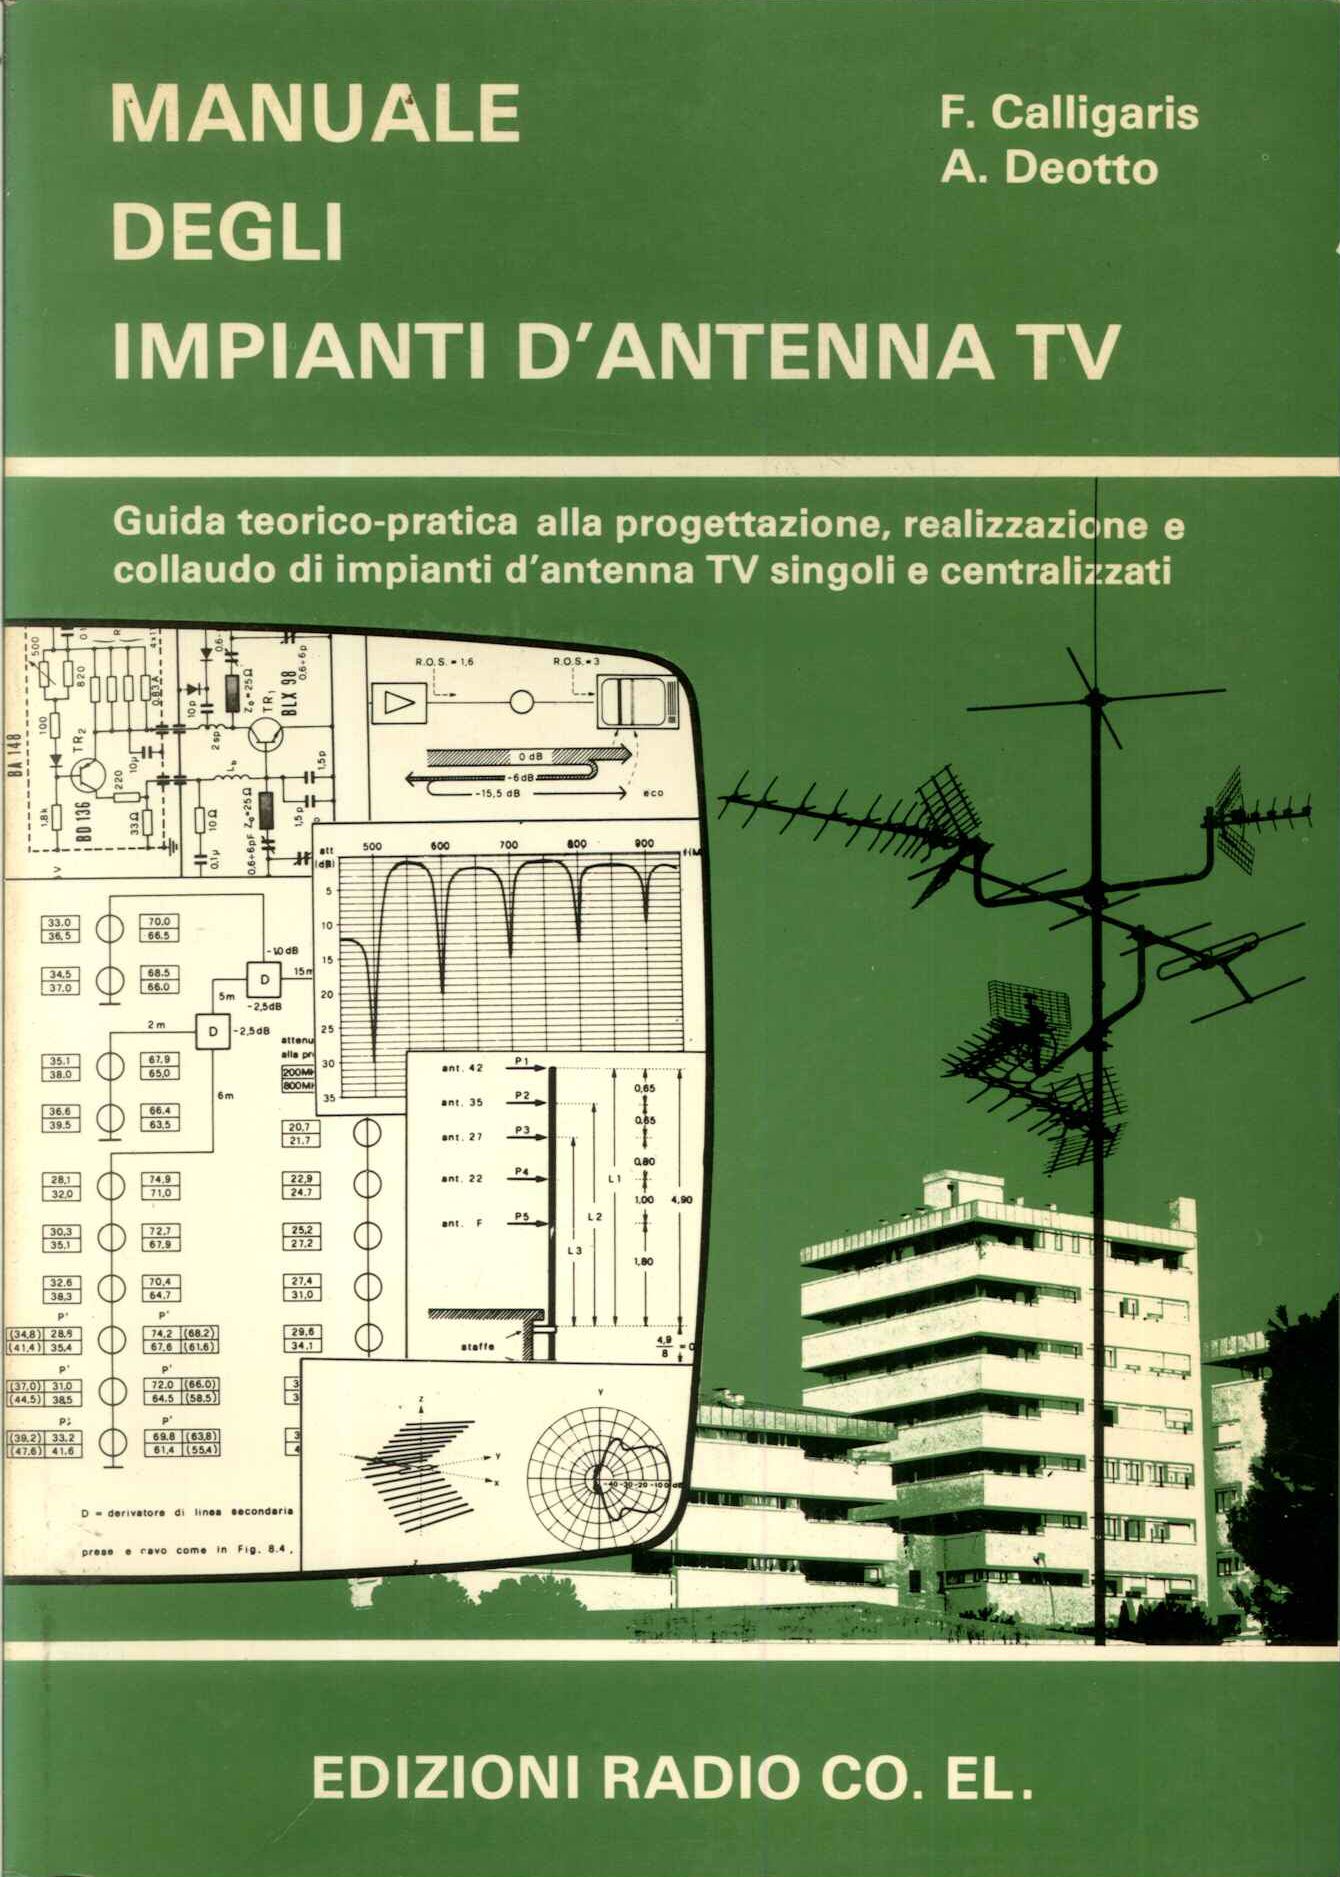 Manuale degli impianti d'antenna TV